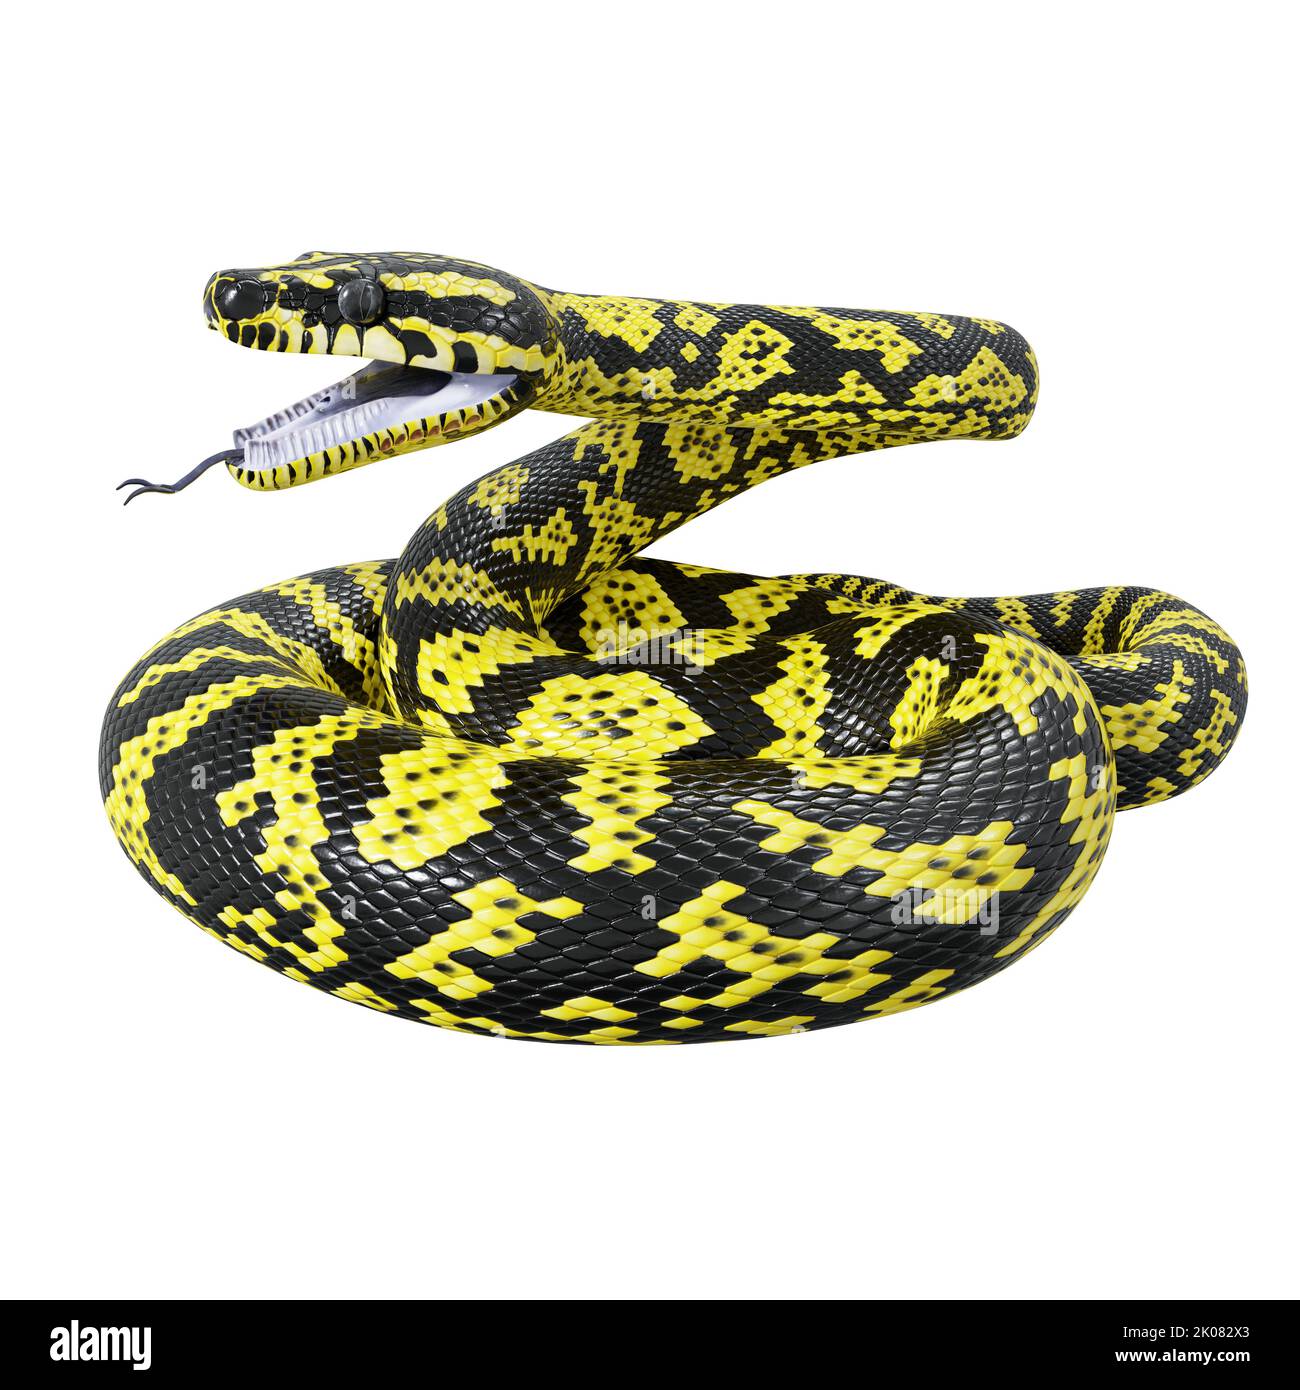 3D illustration of Zebra jungle carpet python. Stock Photo